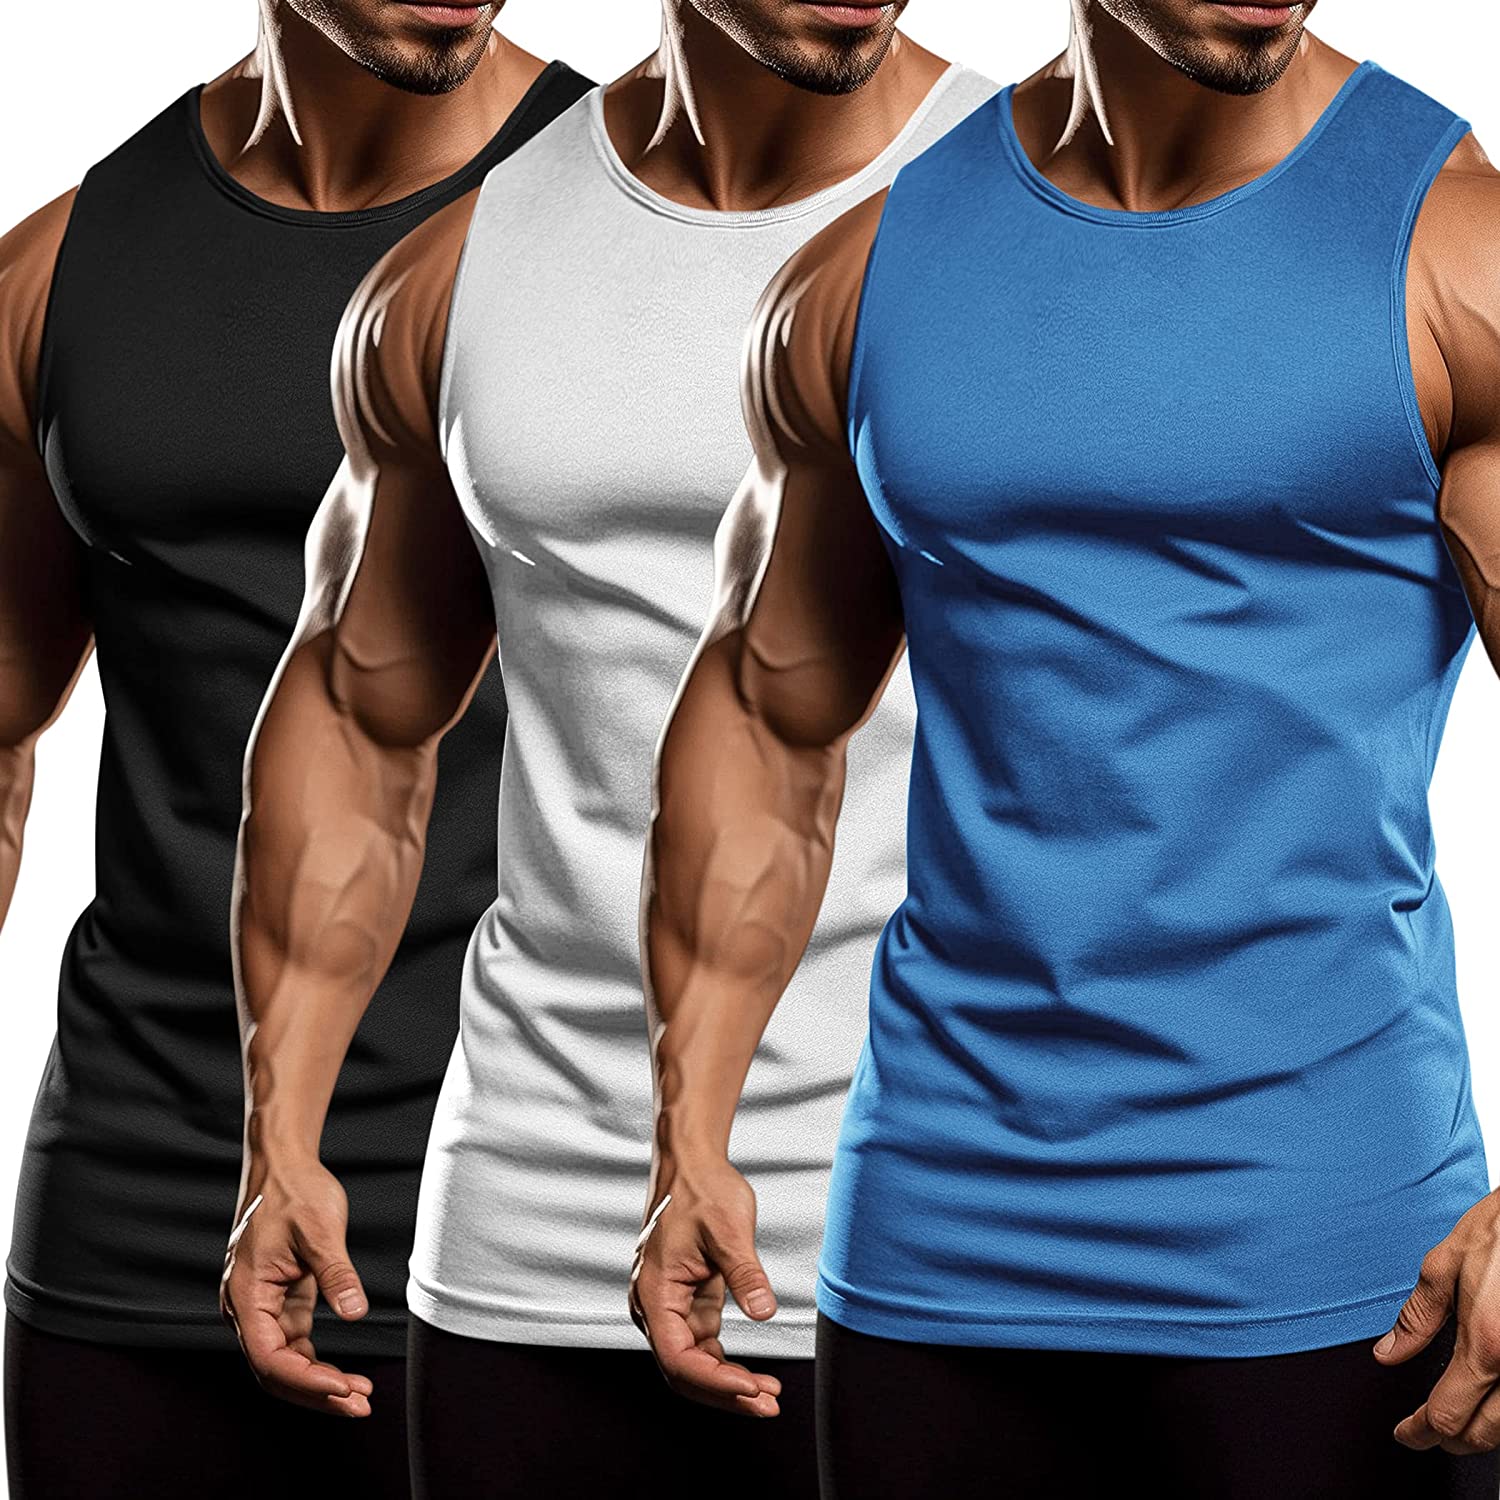  COOFANDY Men's 3 Pack Workout Tank Tops Sleeveless Gym